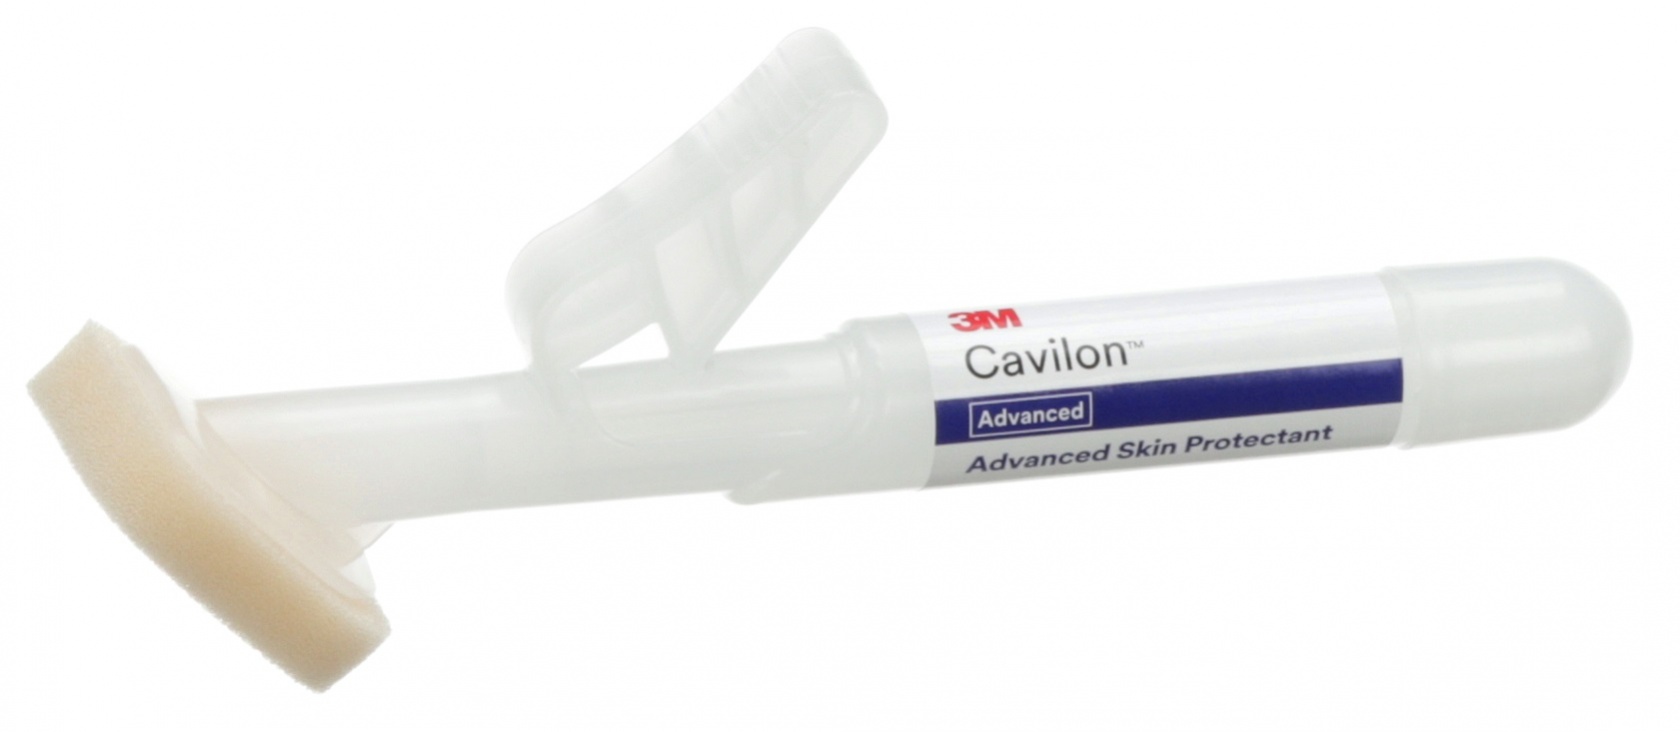 3M Cavilon Advanced Skin Protectant Wand 0.7ml image 0